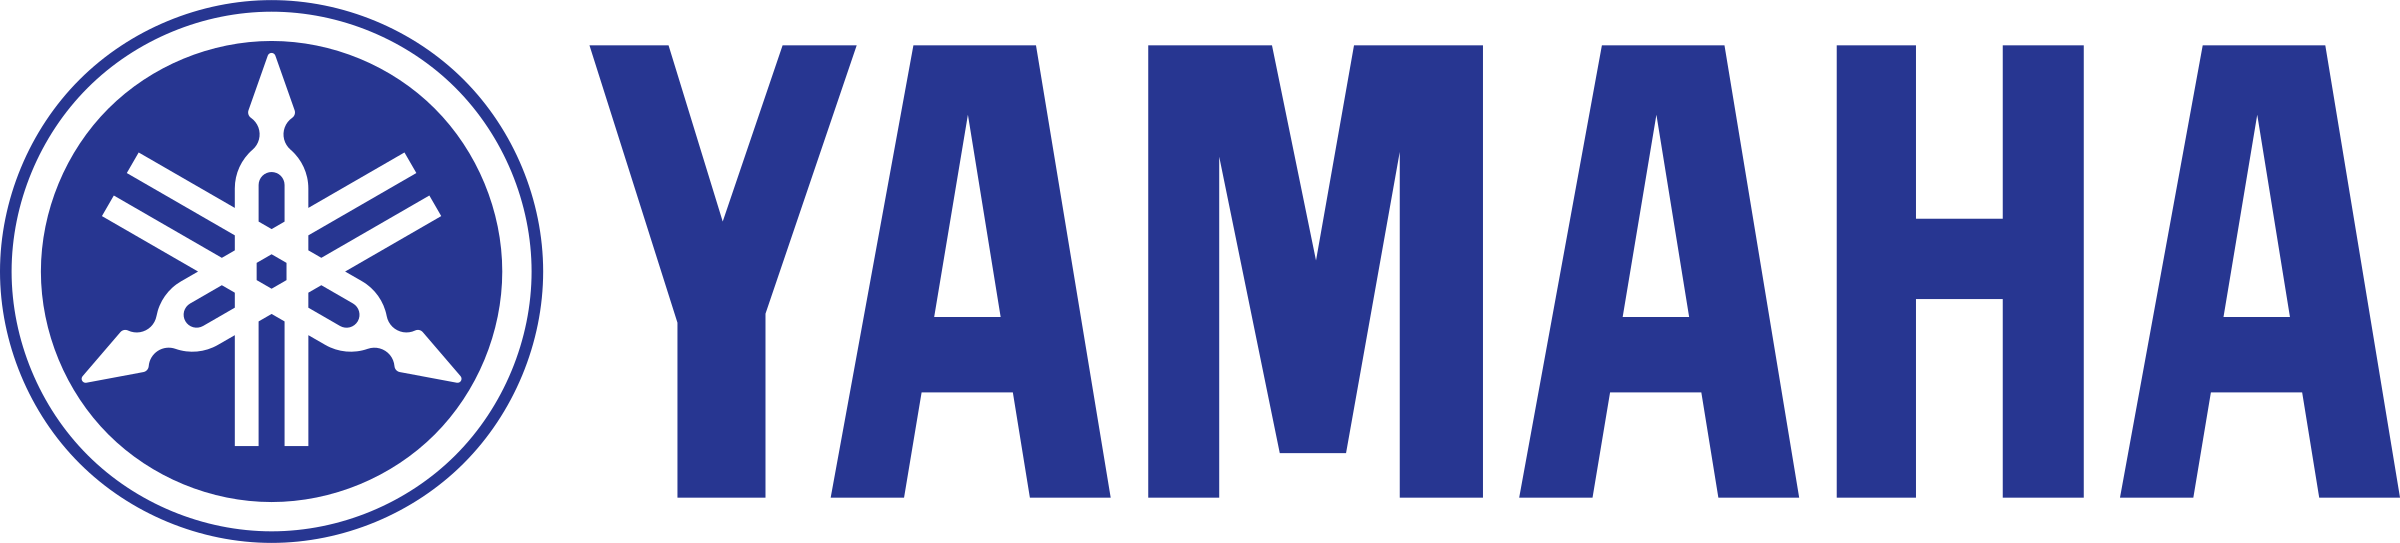 Yamaha Logo PNG HD Isolated